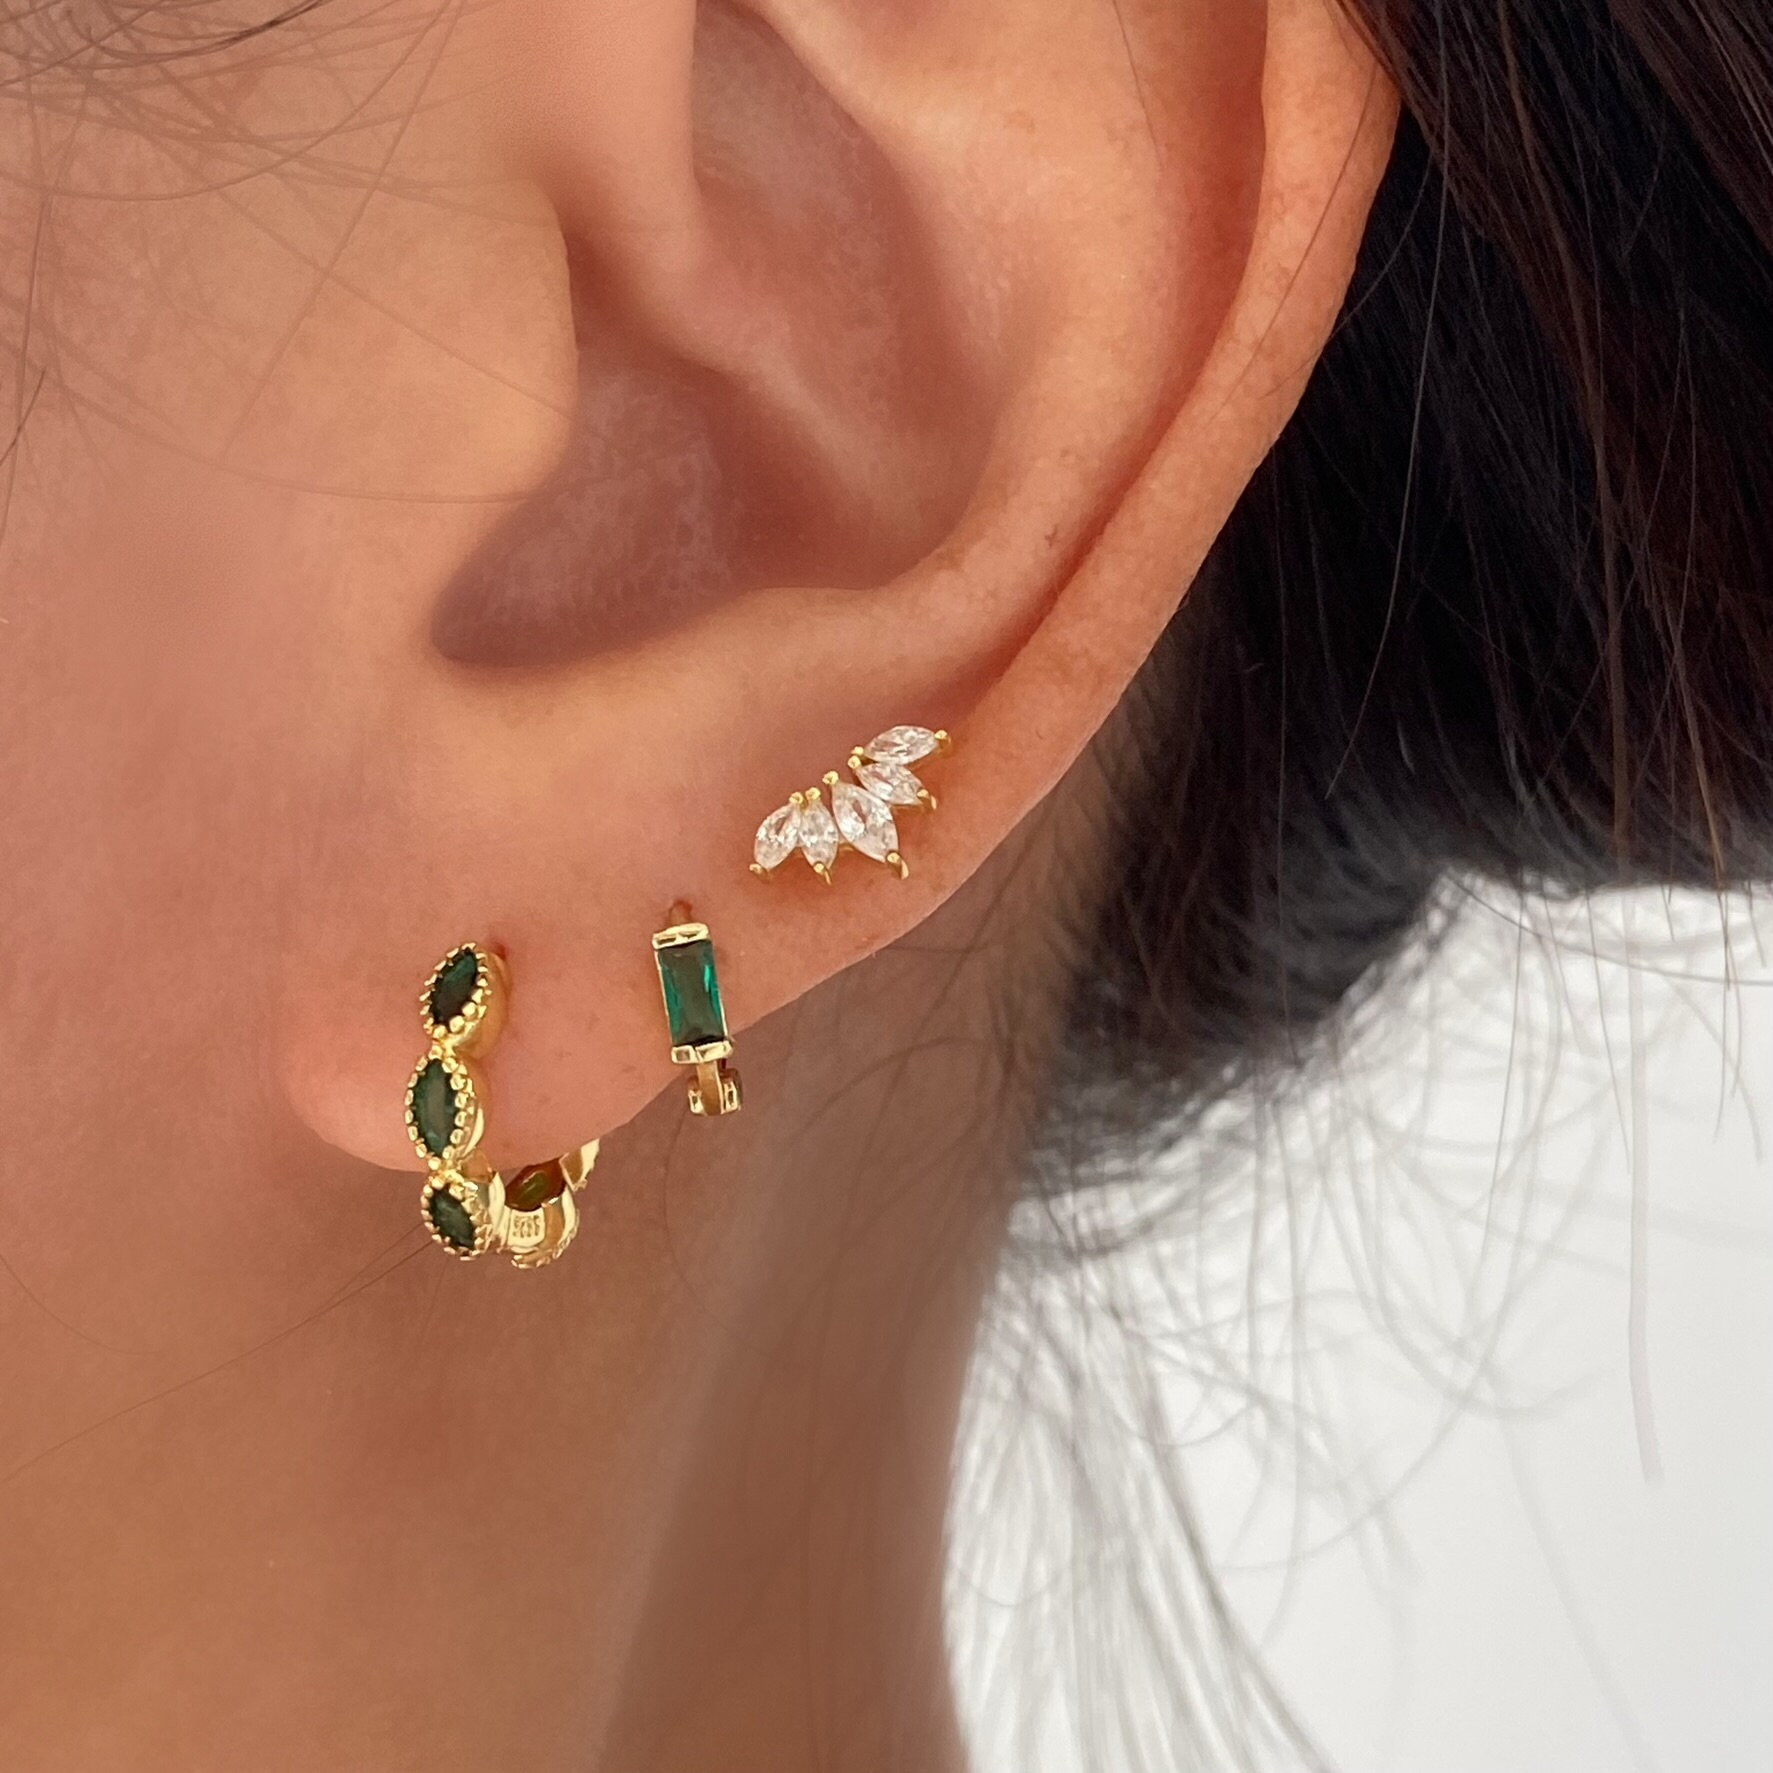 210pcs Gold Stainless Steel Earring Backings Earring Backs Pierced